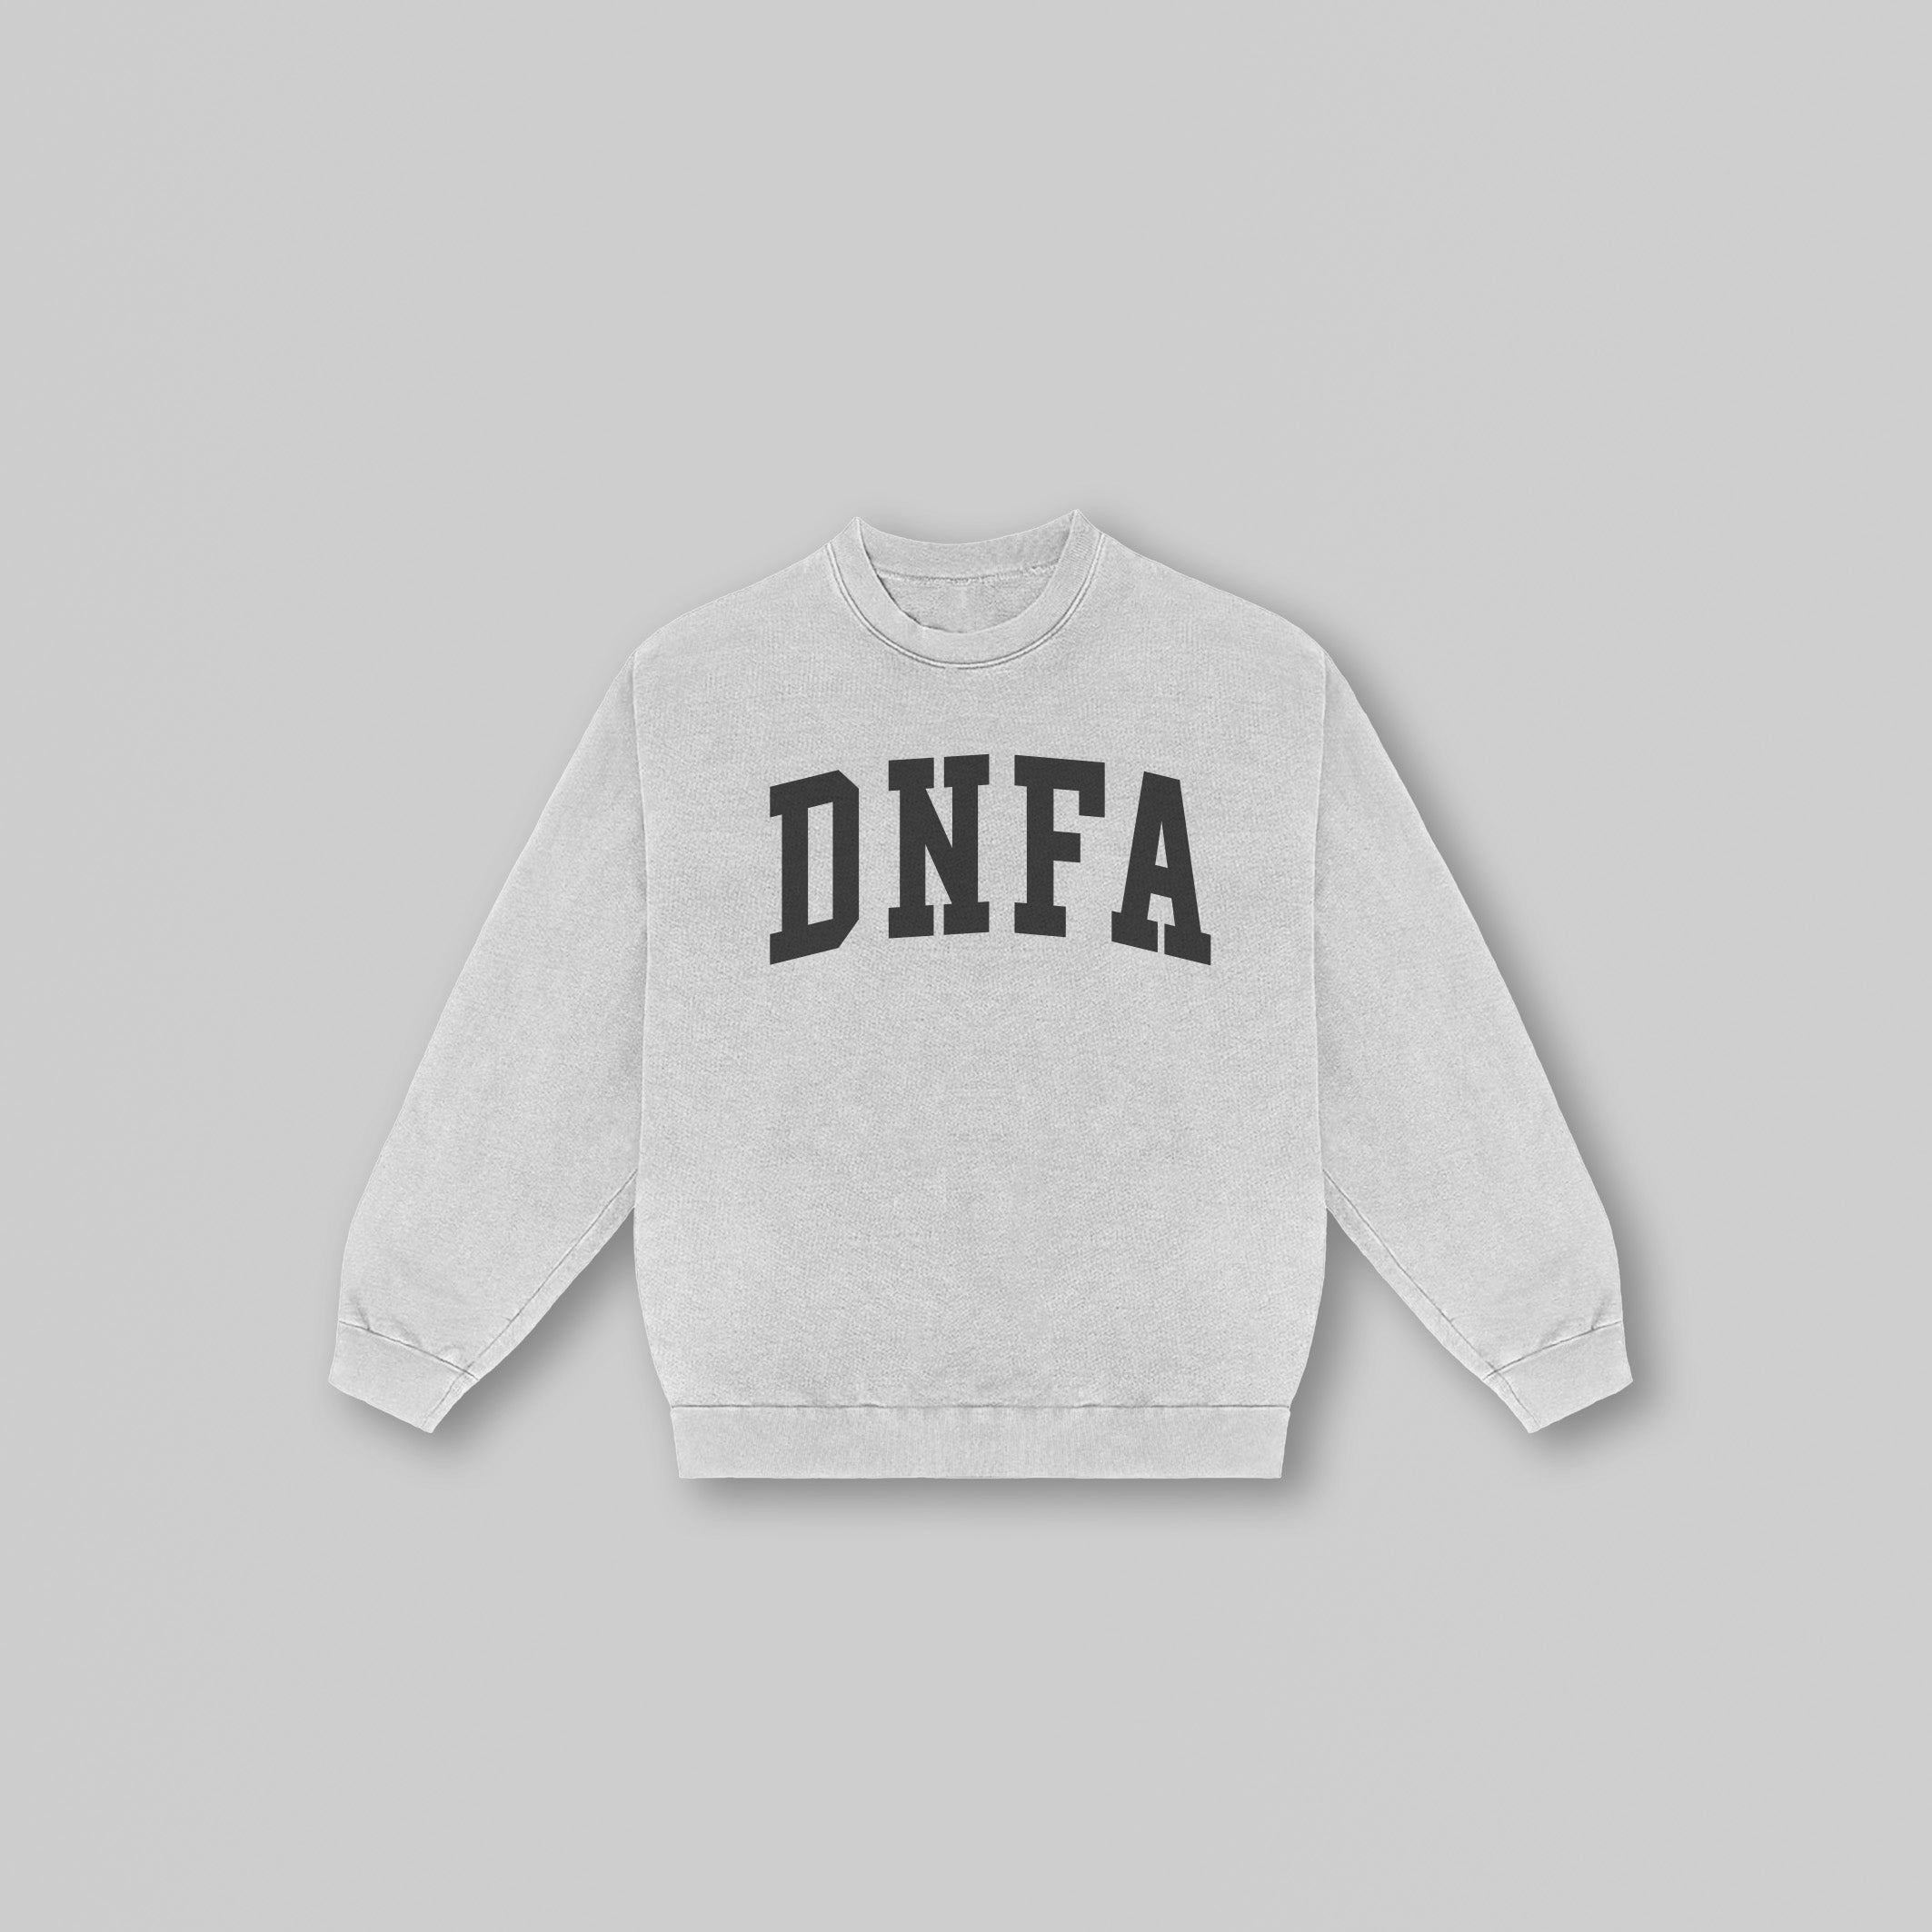 DNFA Sweater